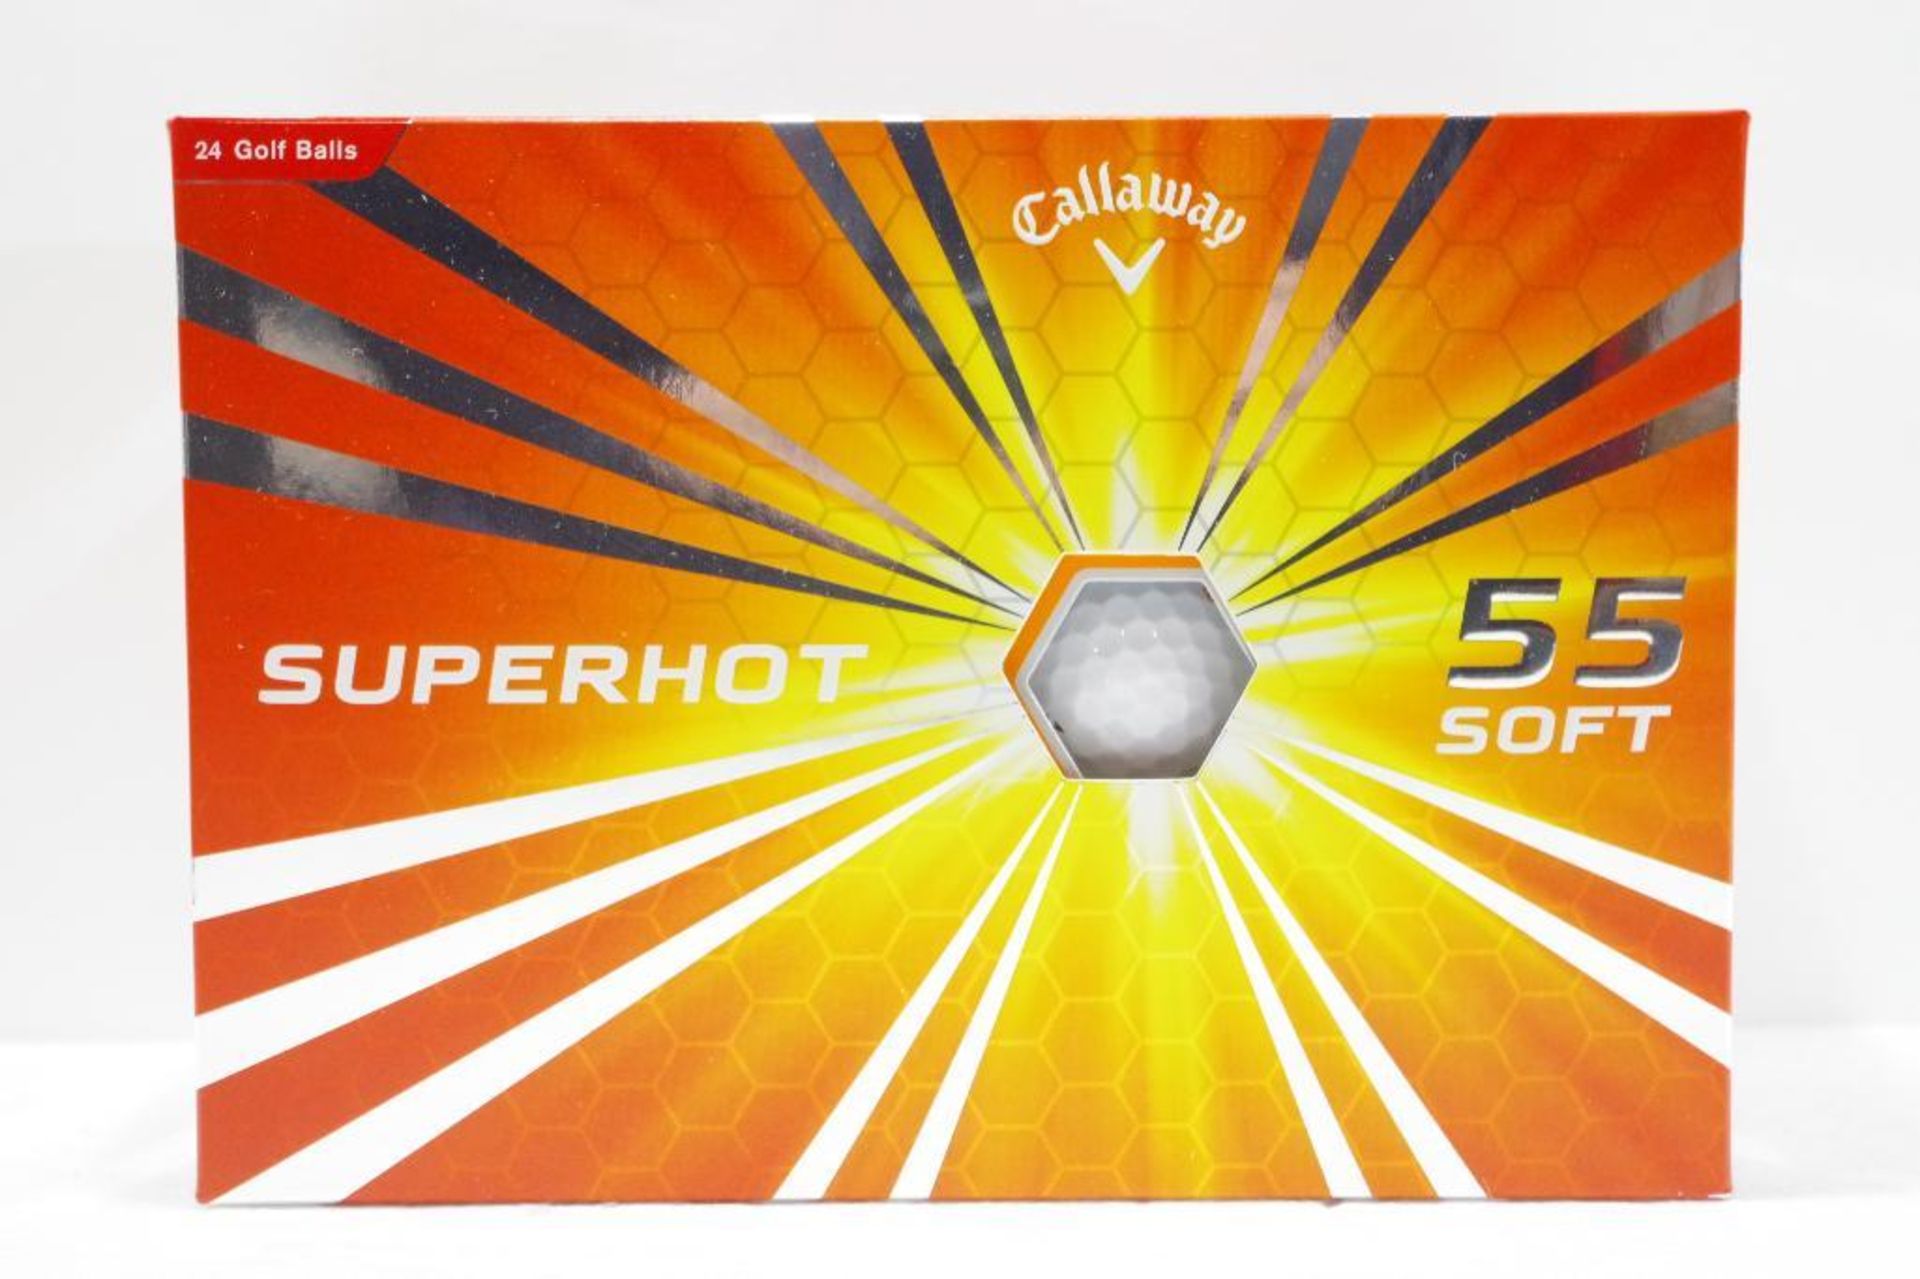 CALLAWAY SUPERHOT 55 Golf Balls, Box of 24 - Image 2 of 2